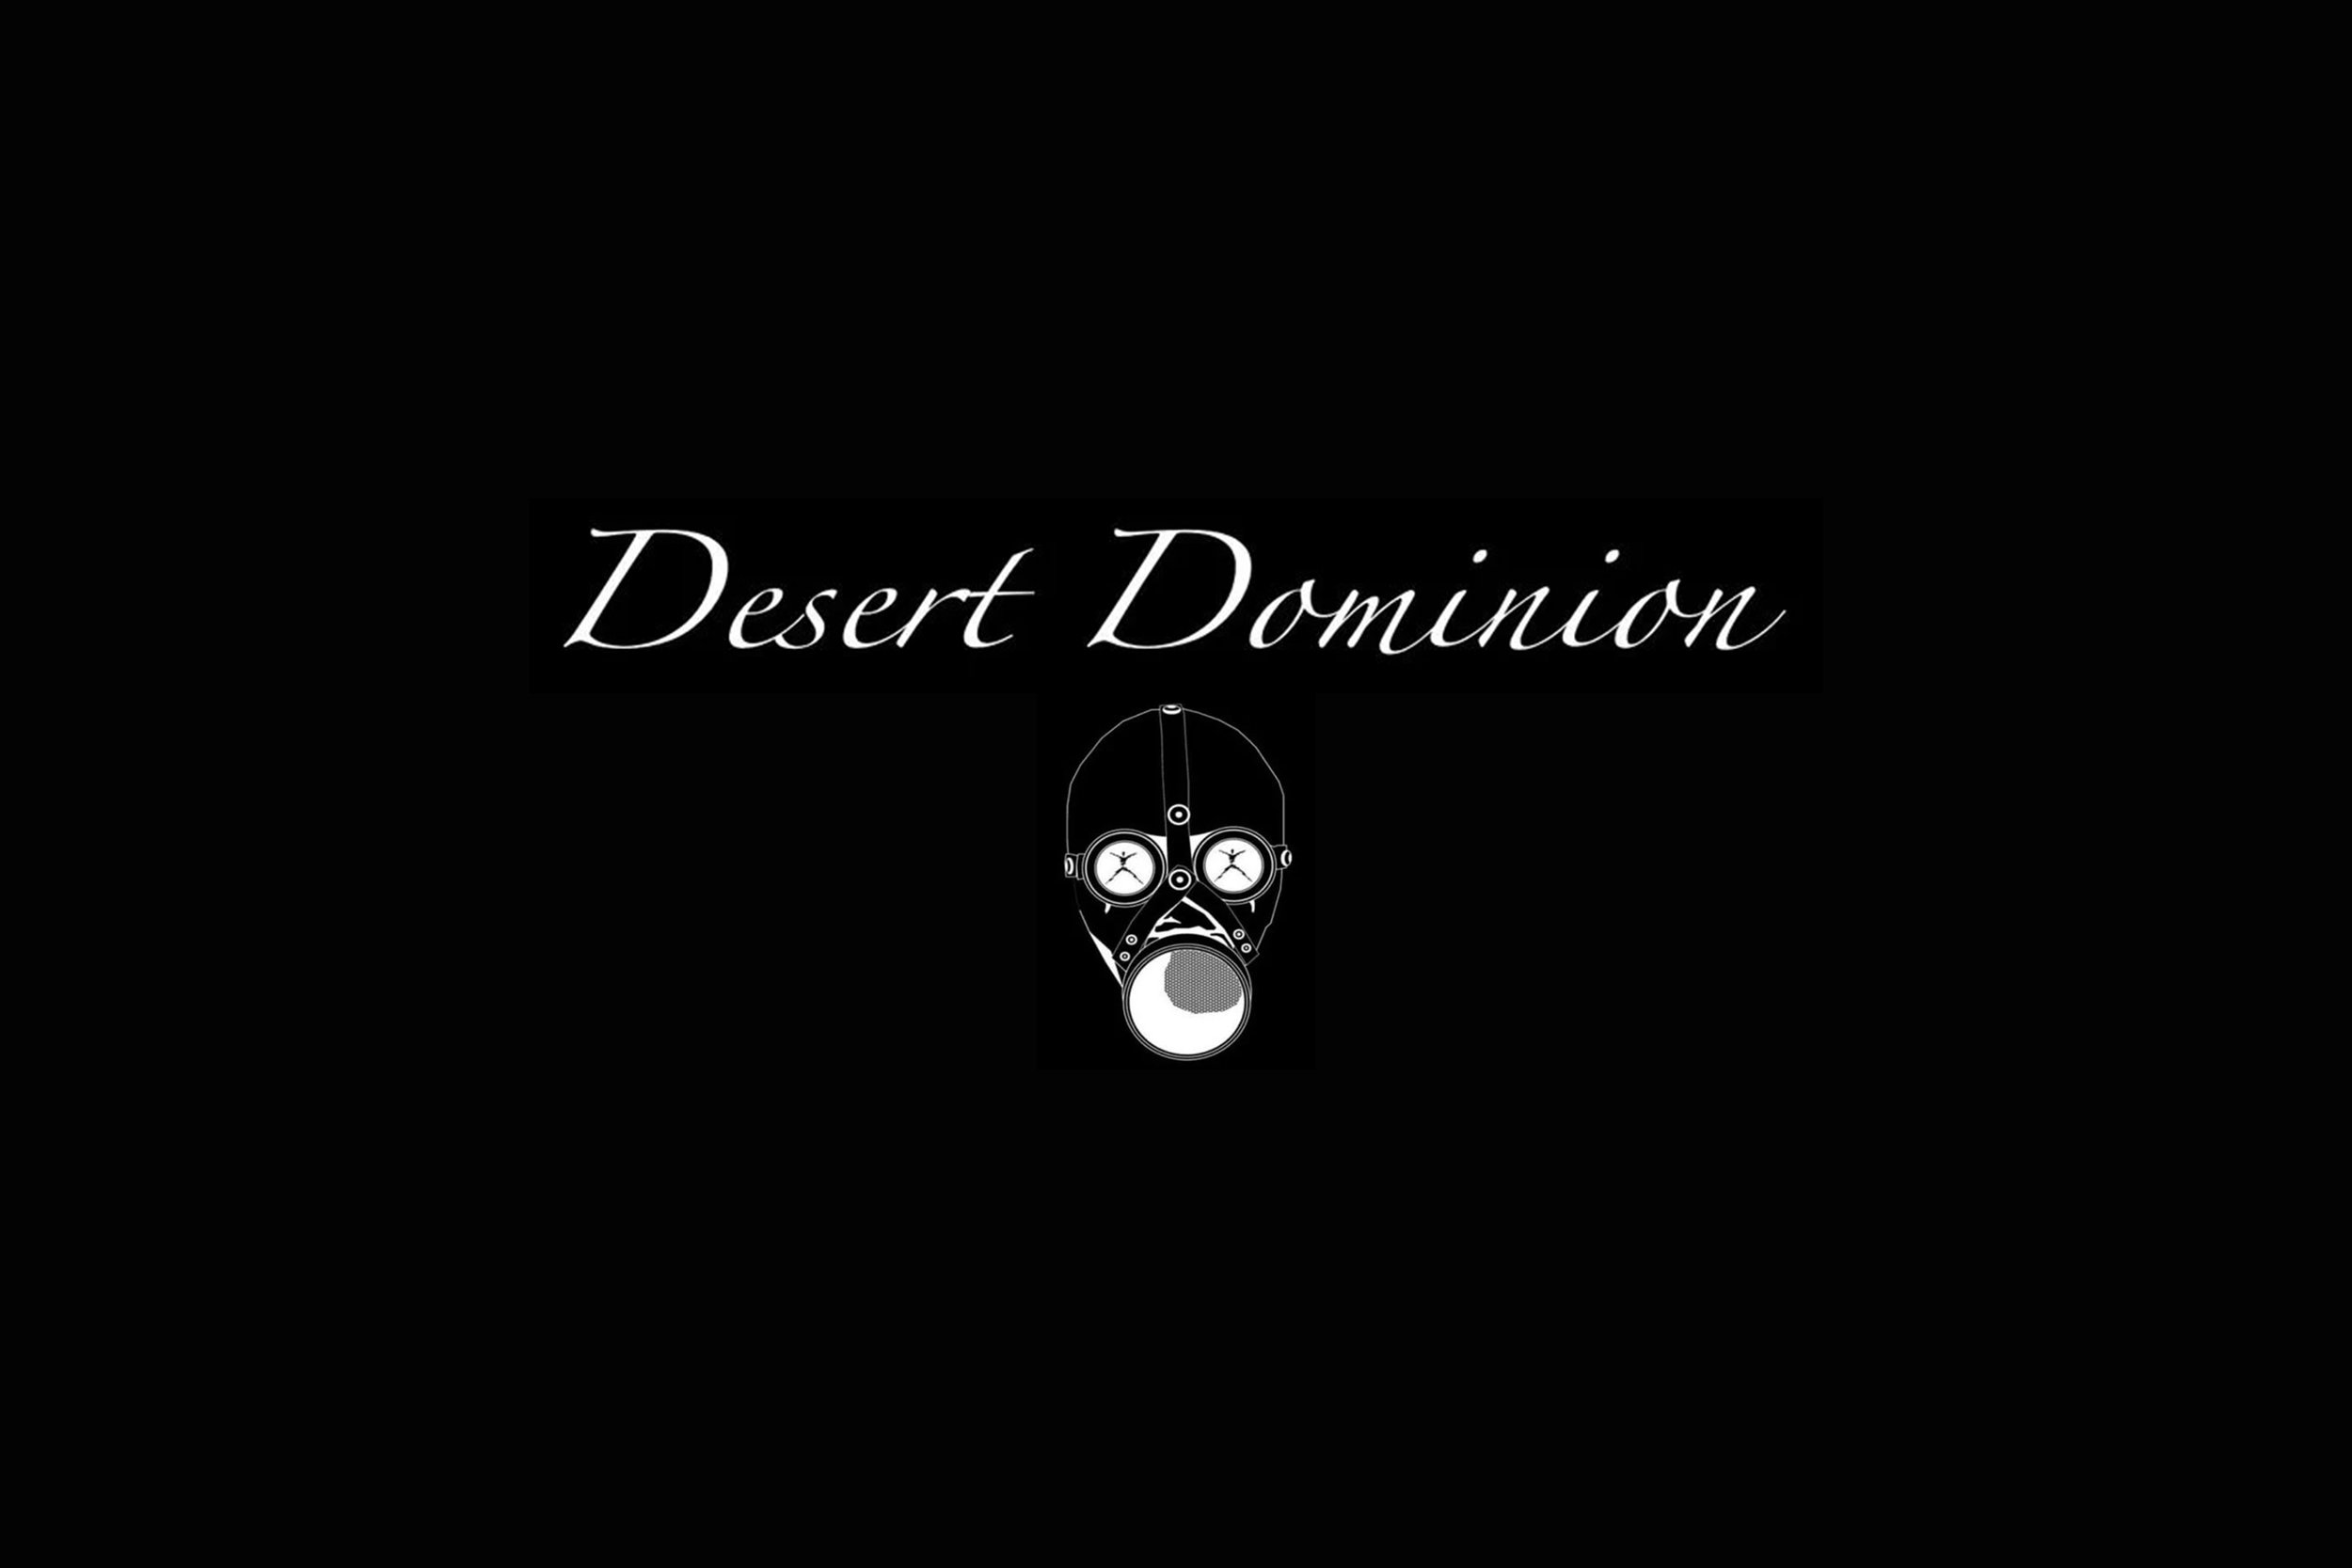 Desert Dominion